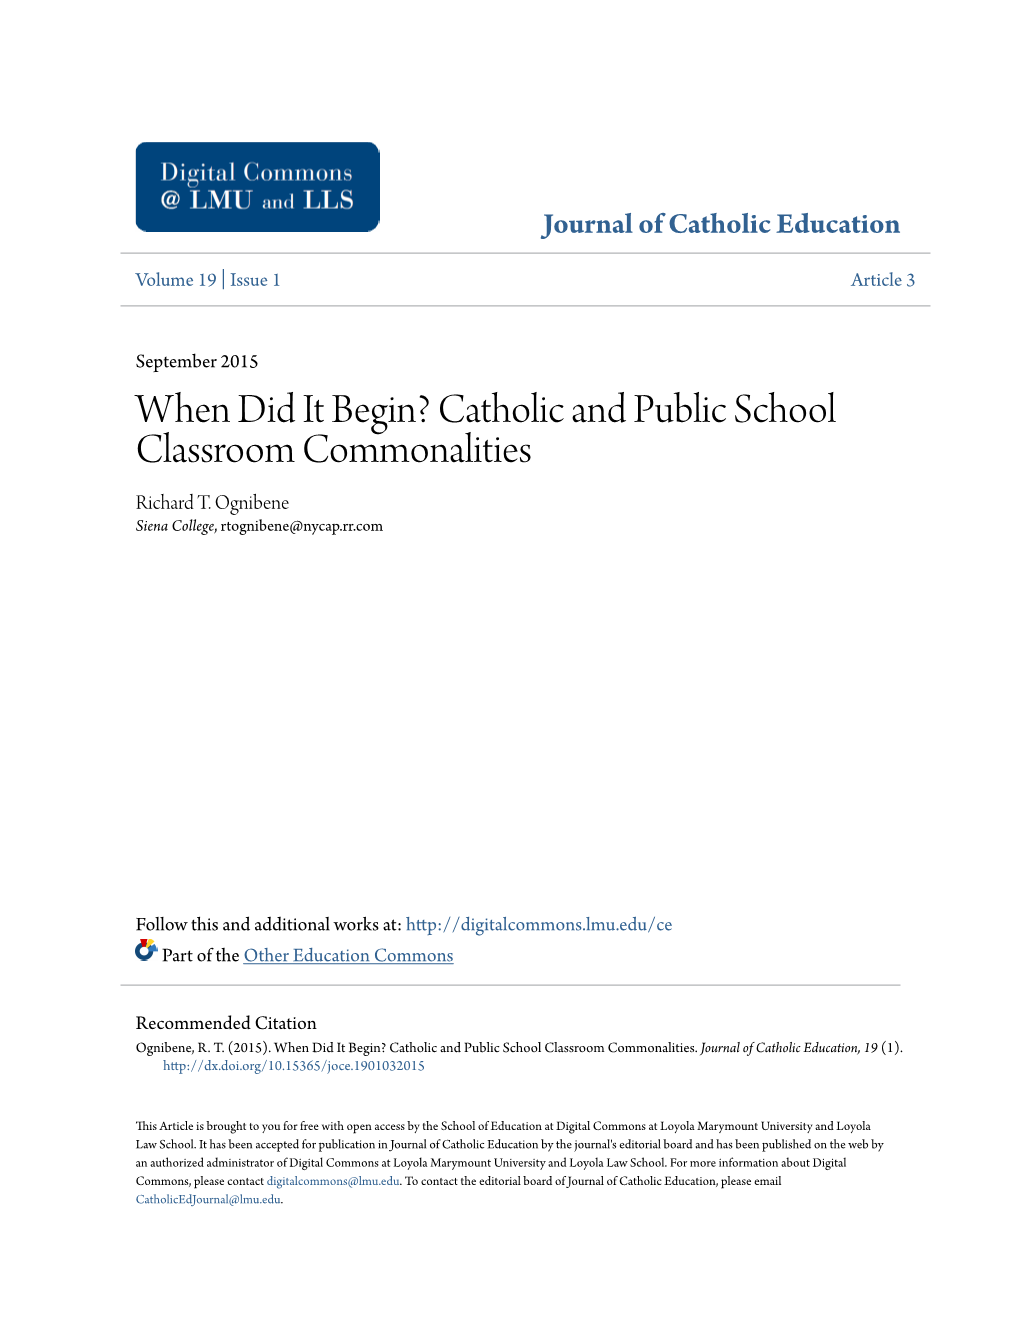 Catholic and Public School Classroom Commonalities Richard T